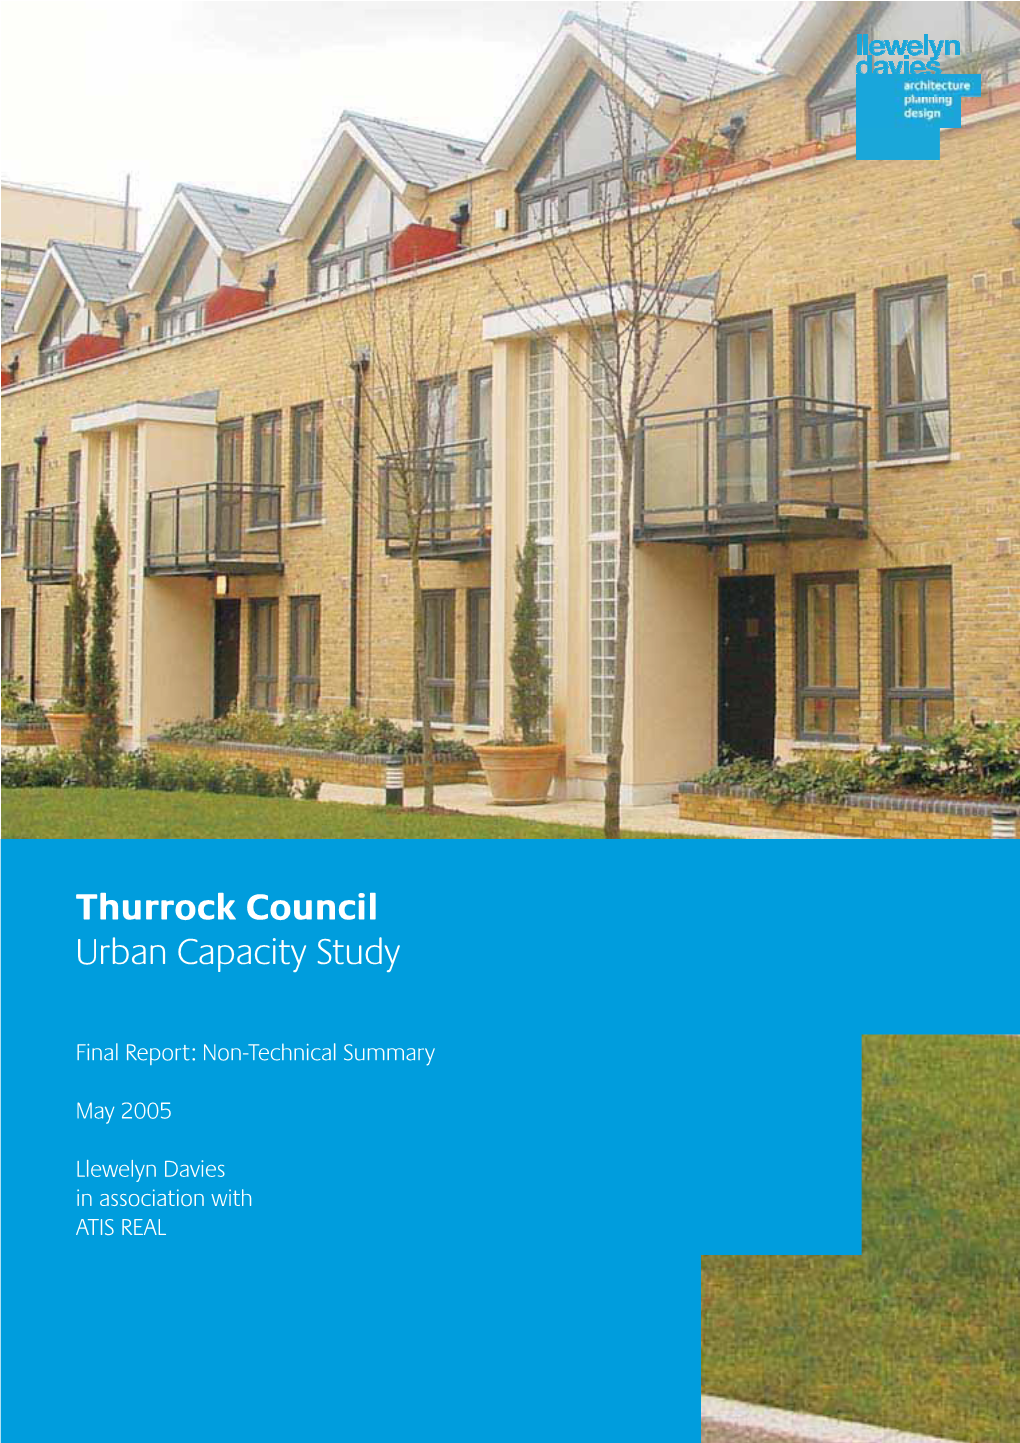 Urban Capacity Study (May 2005)